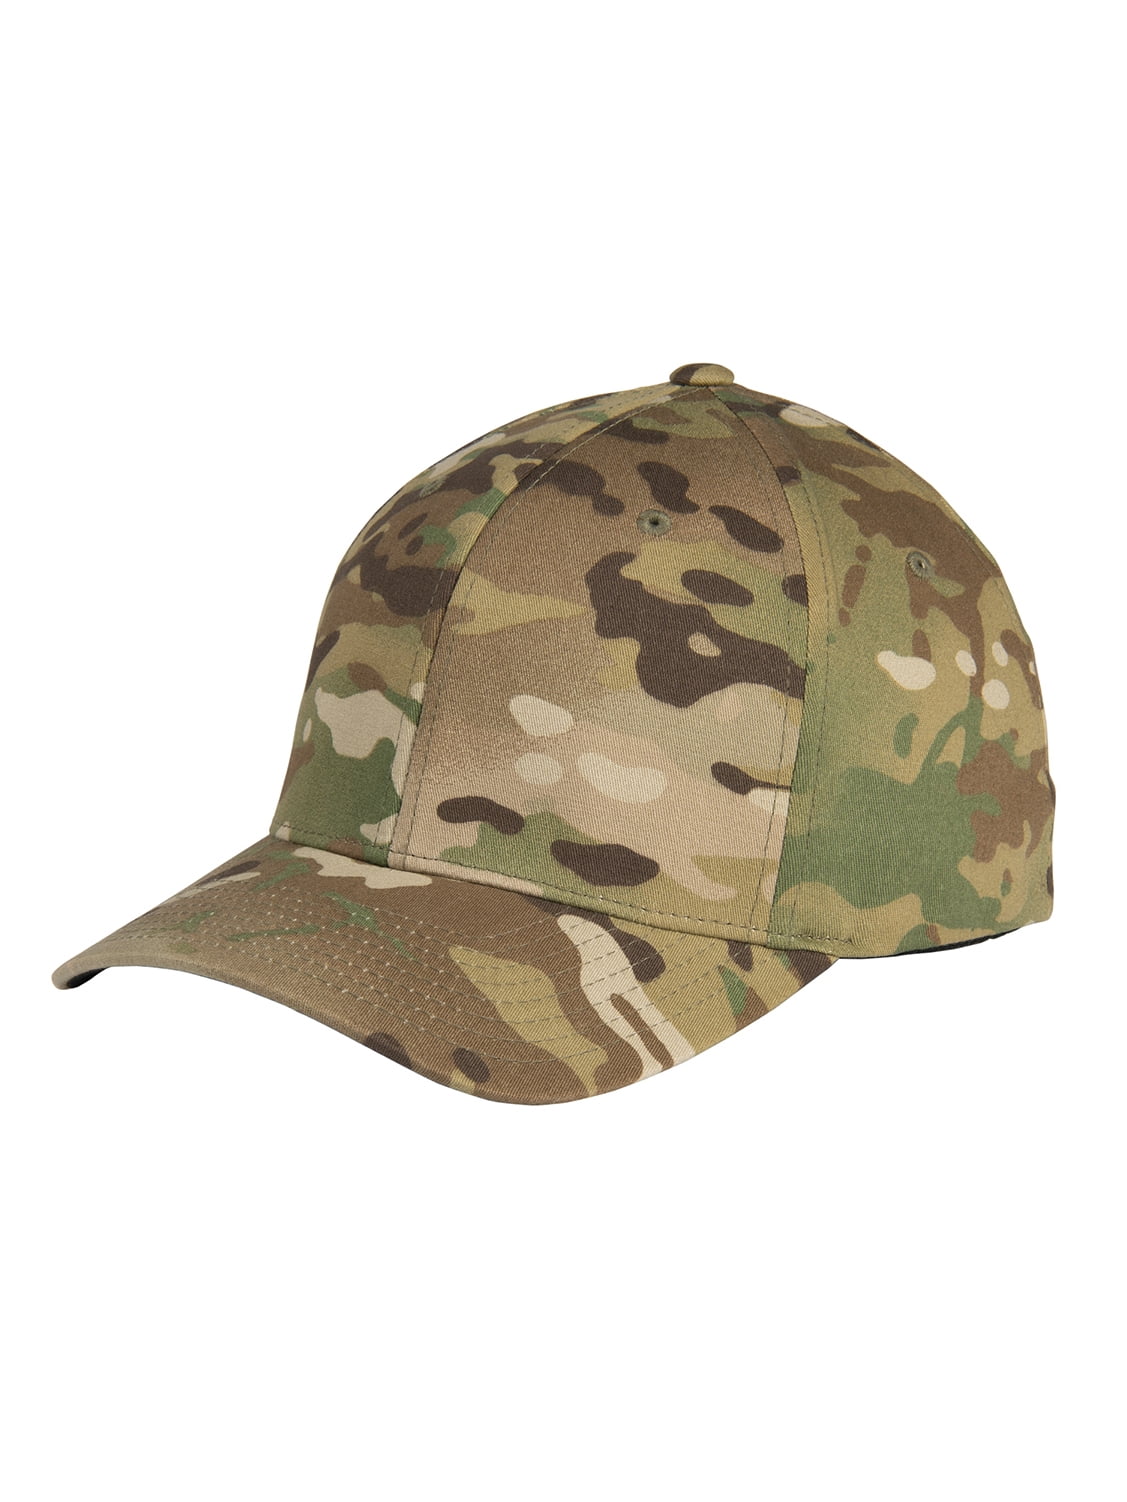 Large/X-Large - Baseball Headwear Cap Flex Olive Drab/Green - Top Fit